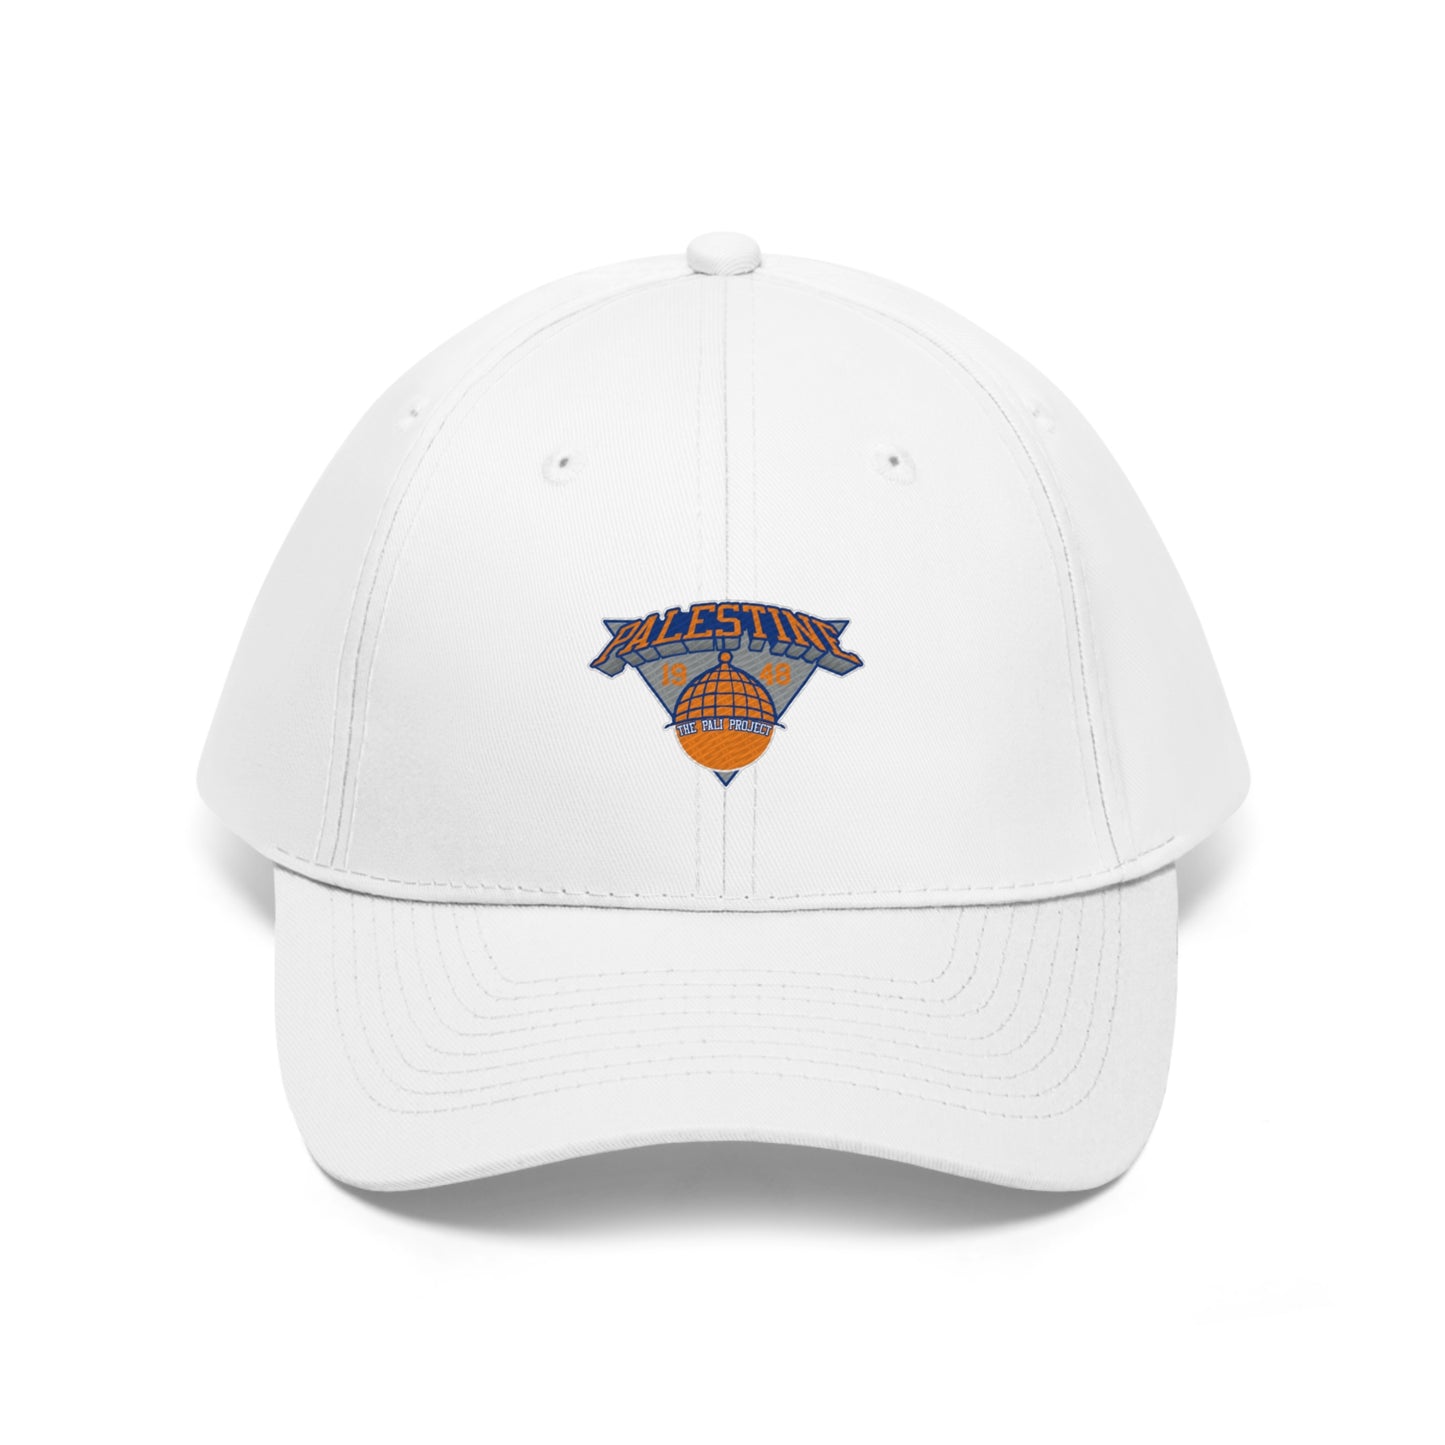 Palestine Knicks Hat